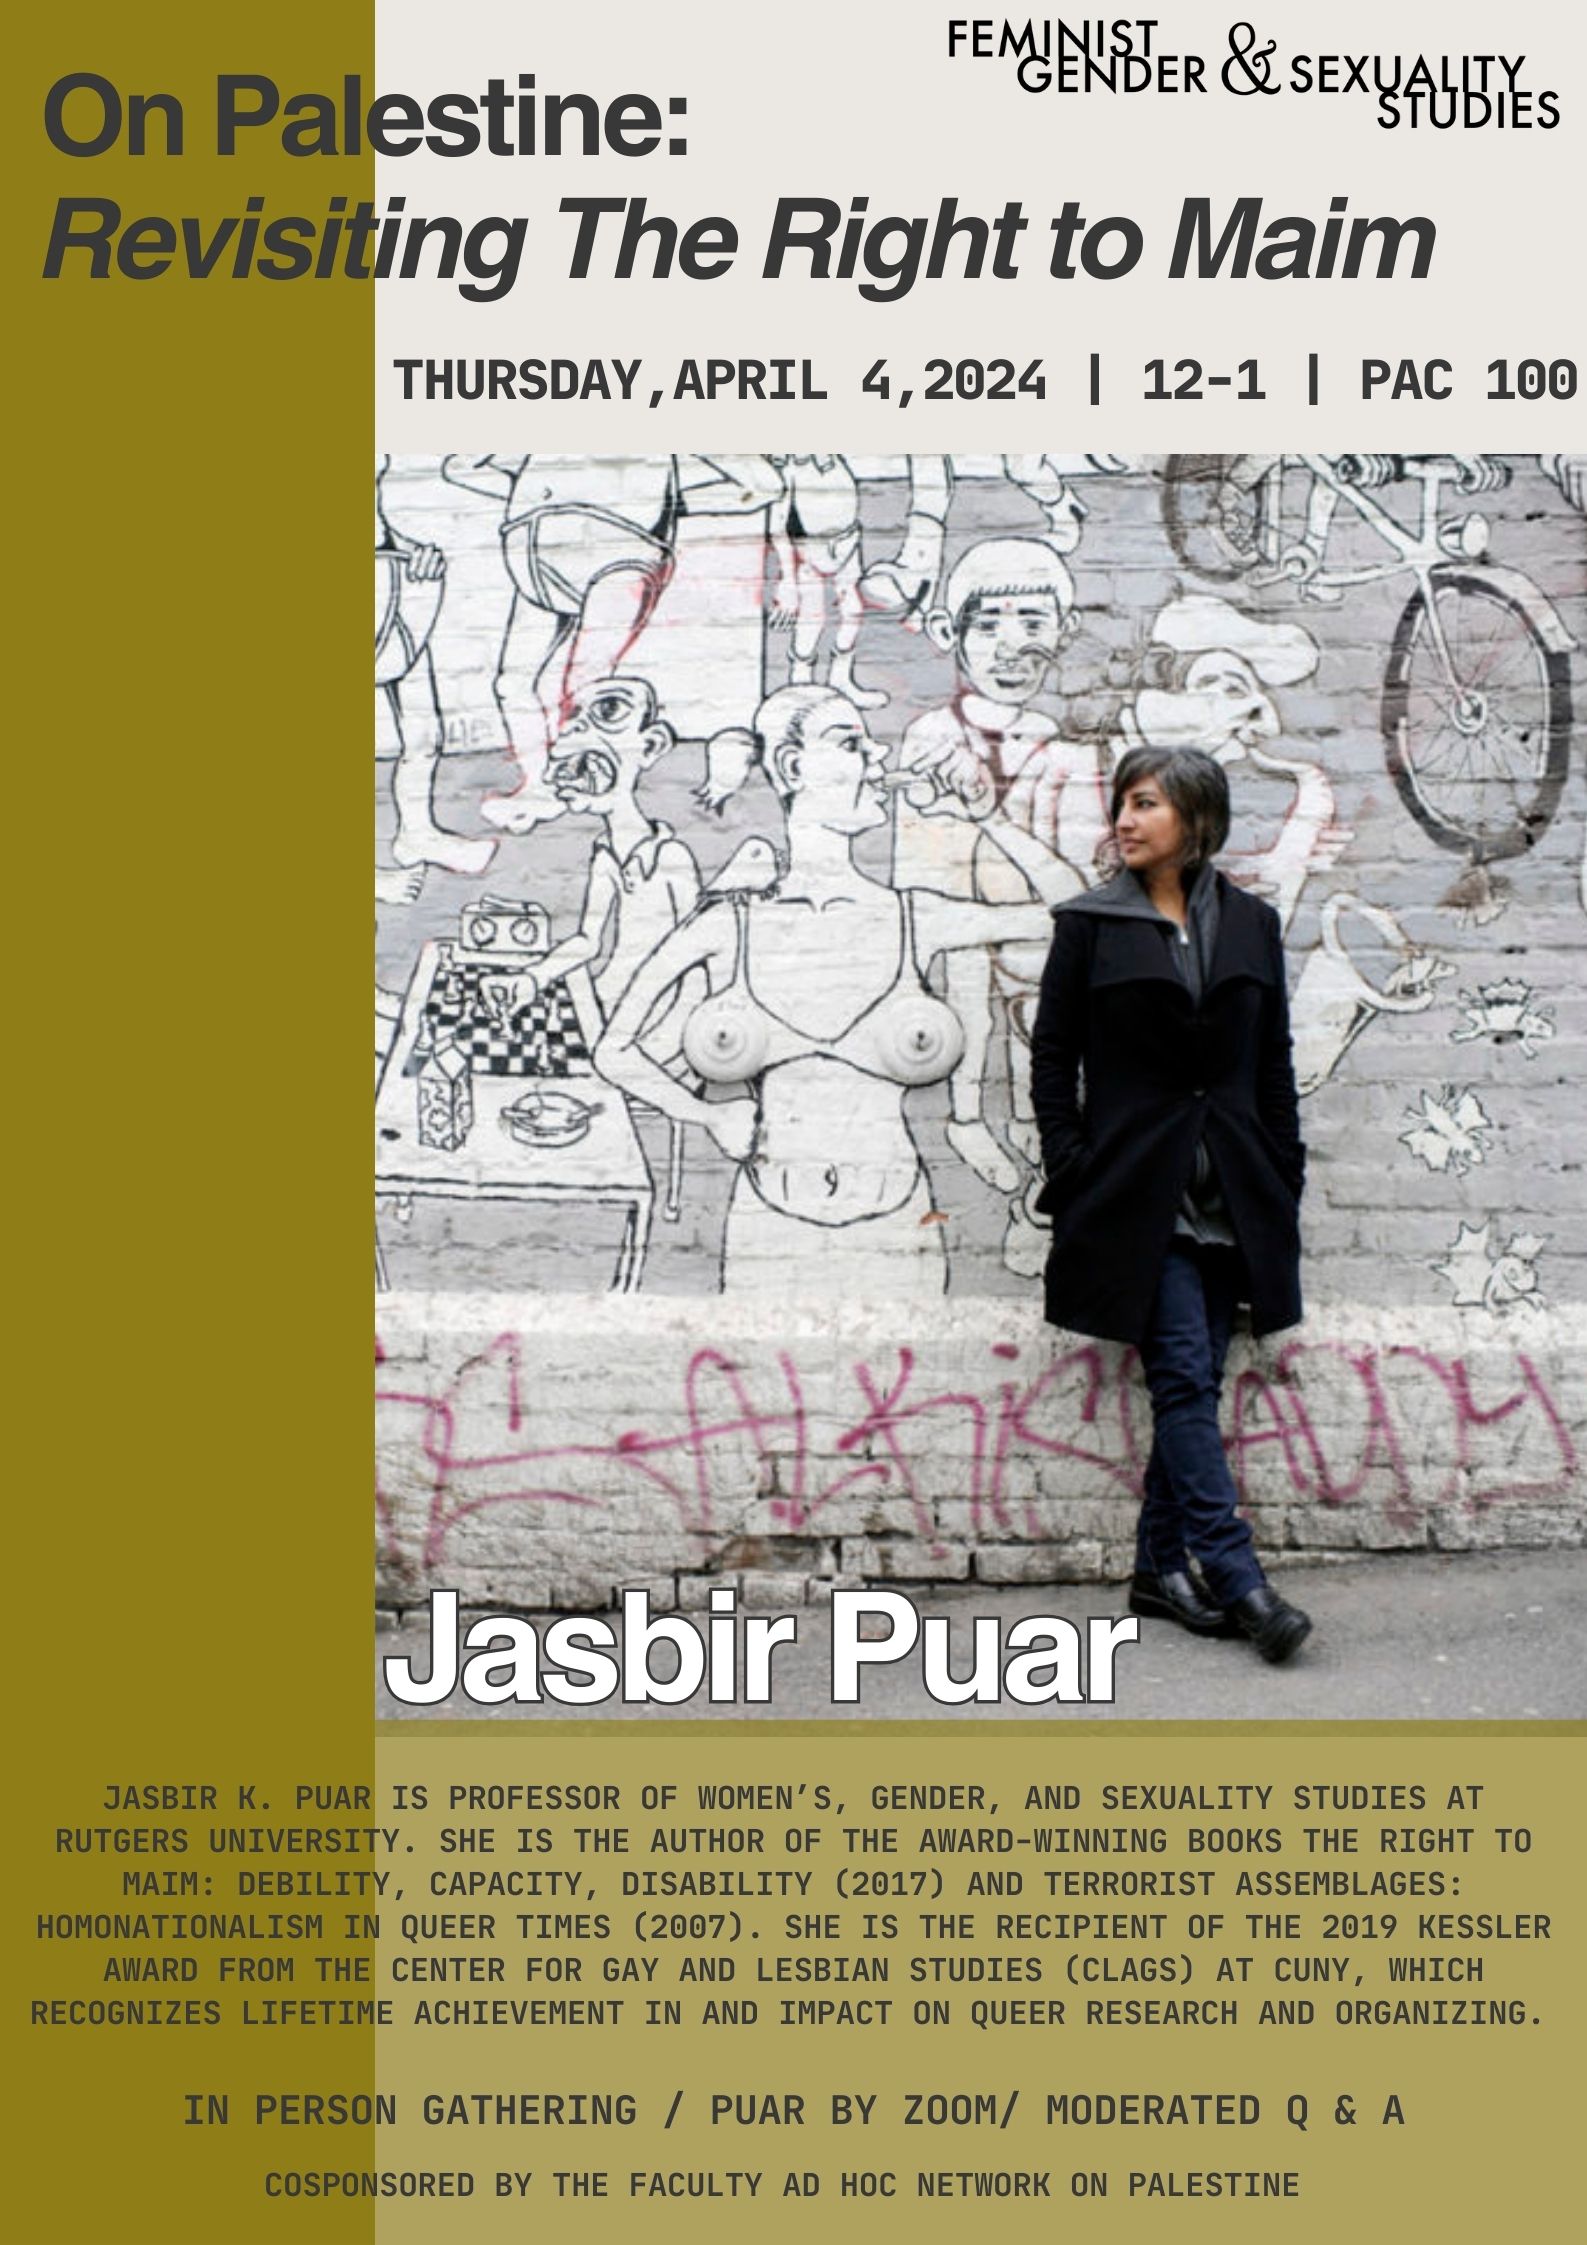 Jasbir-Puar-Poster-.jpg